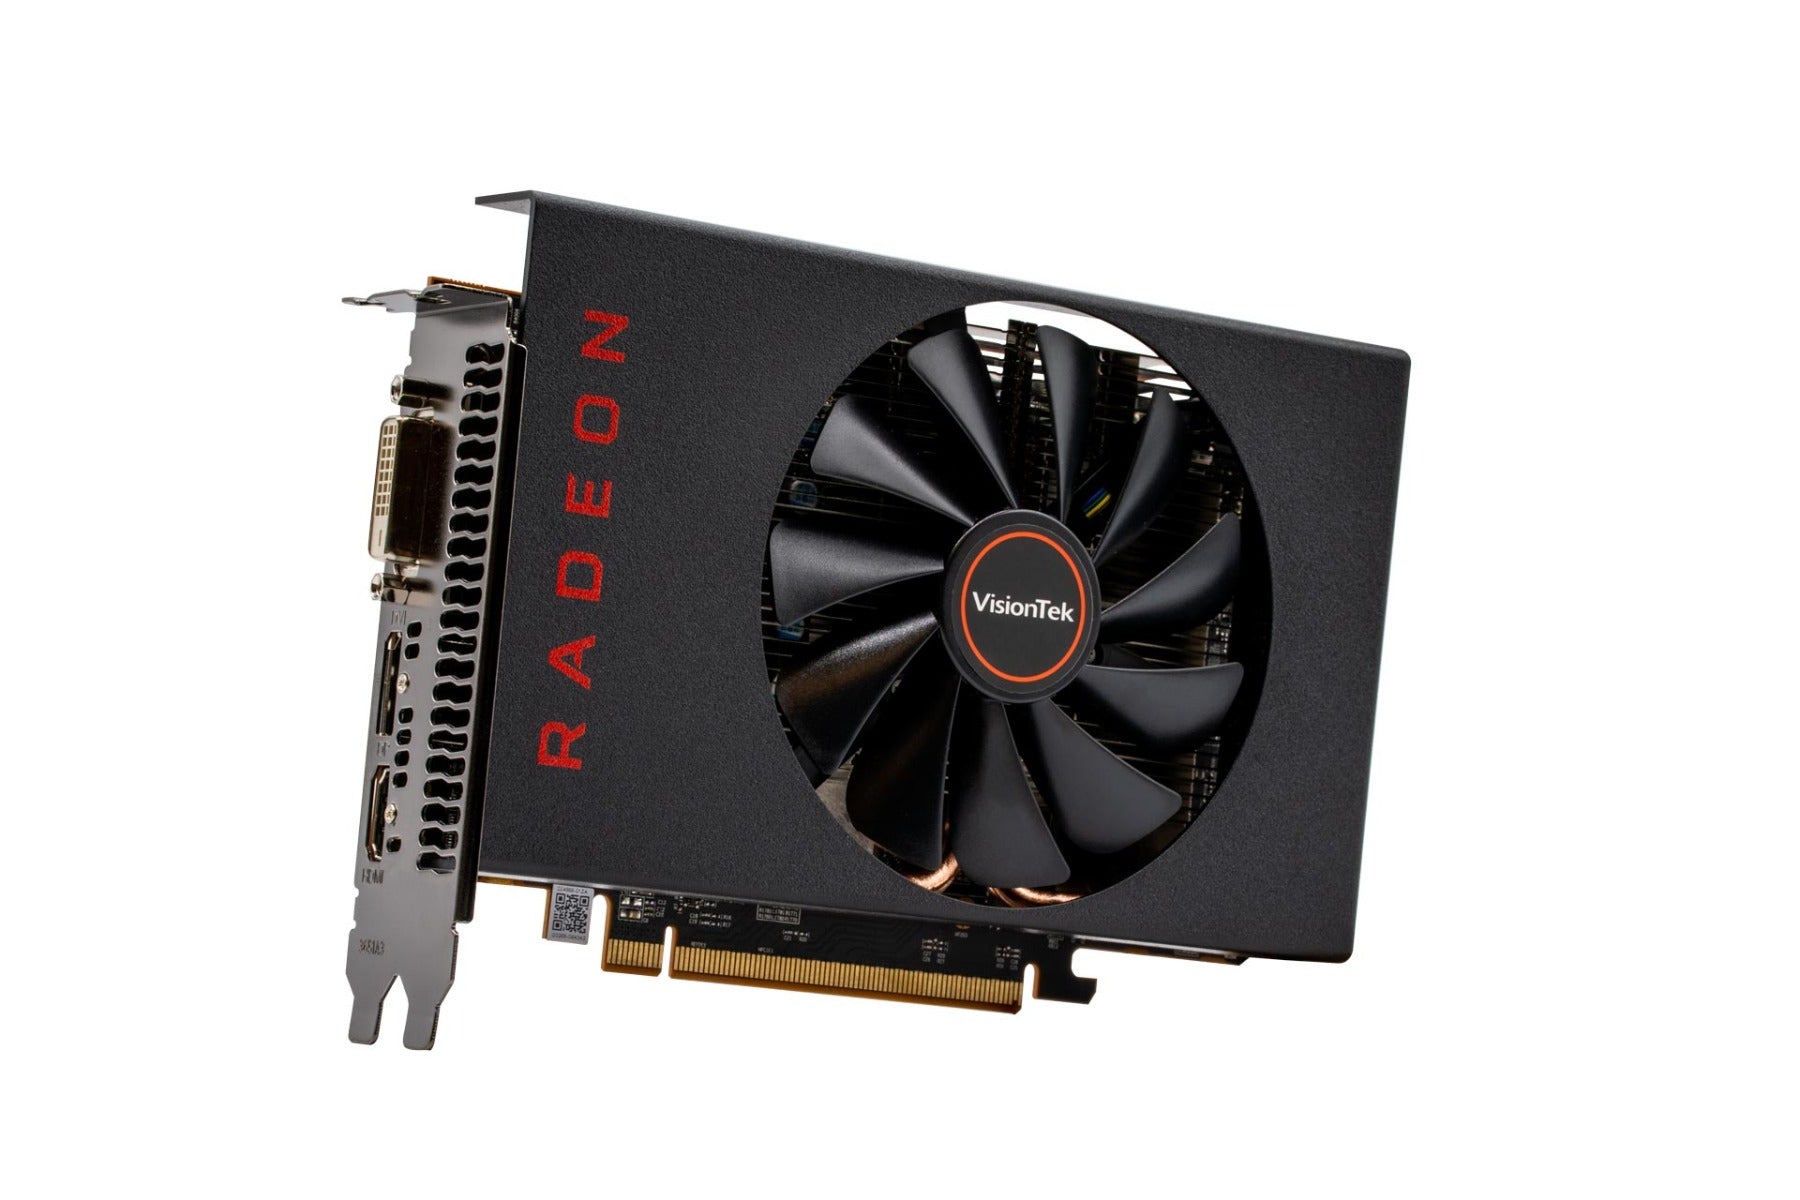 Radeon RX 5500 XT 4GB GDDR6 Graphics Card – VisionTek.com